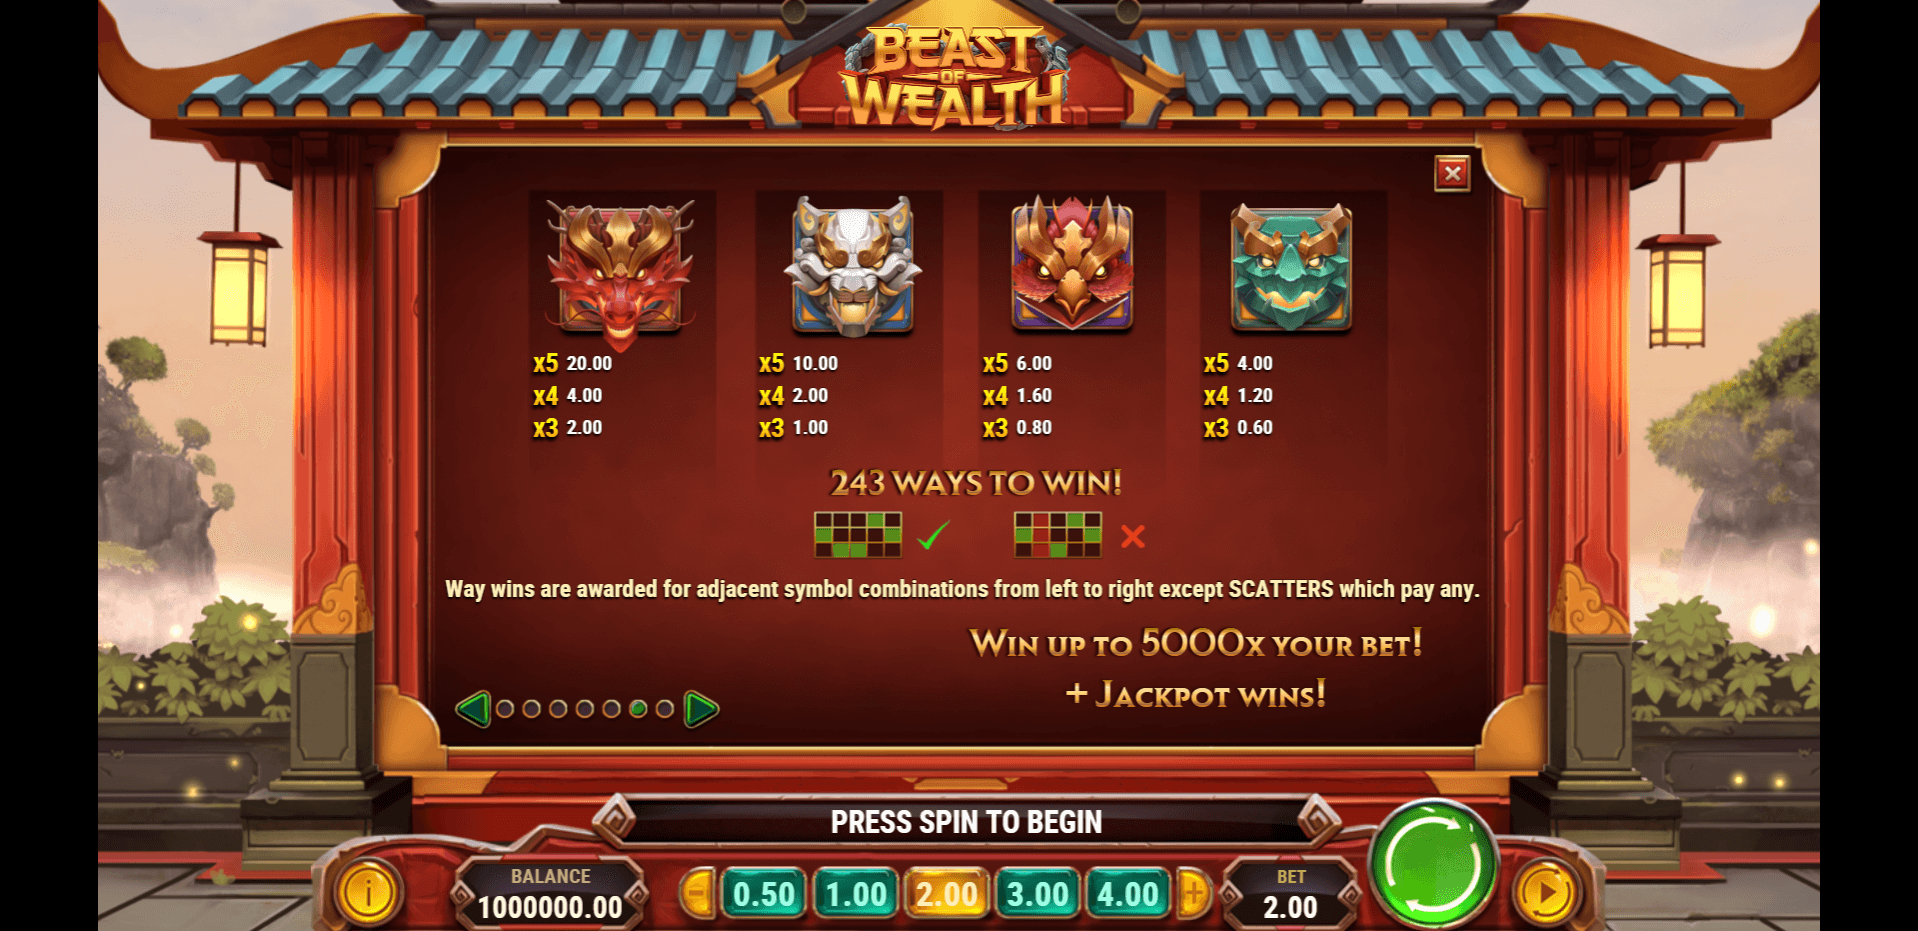 beast of wealth slot machine detail image 6